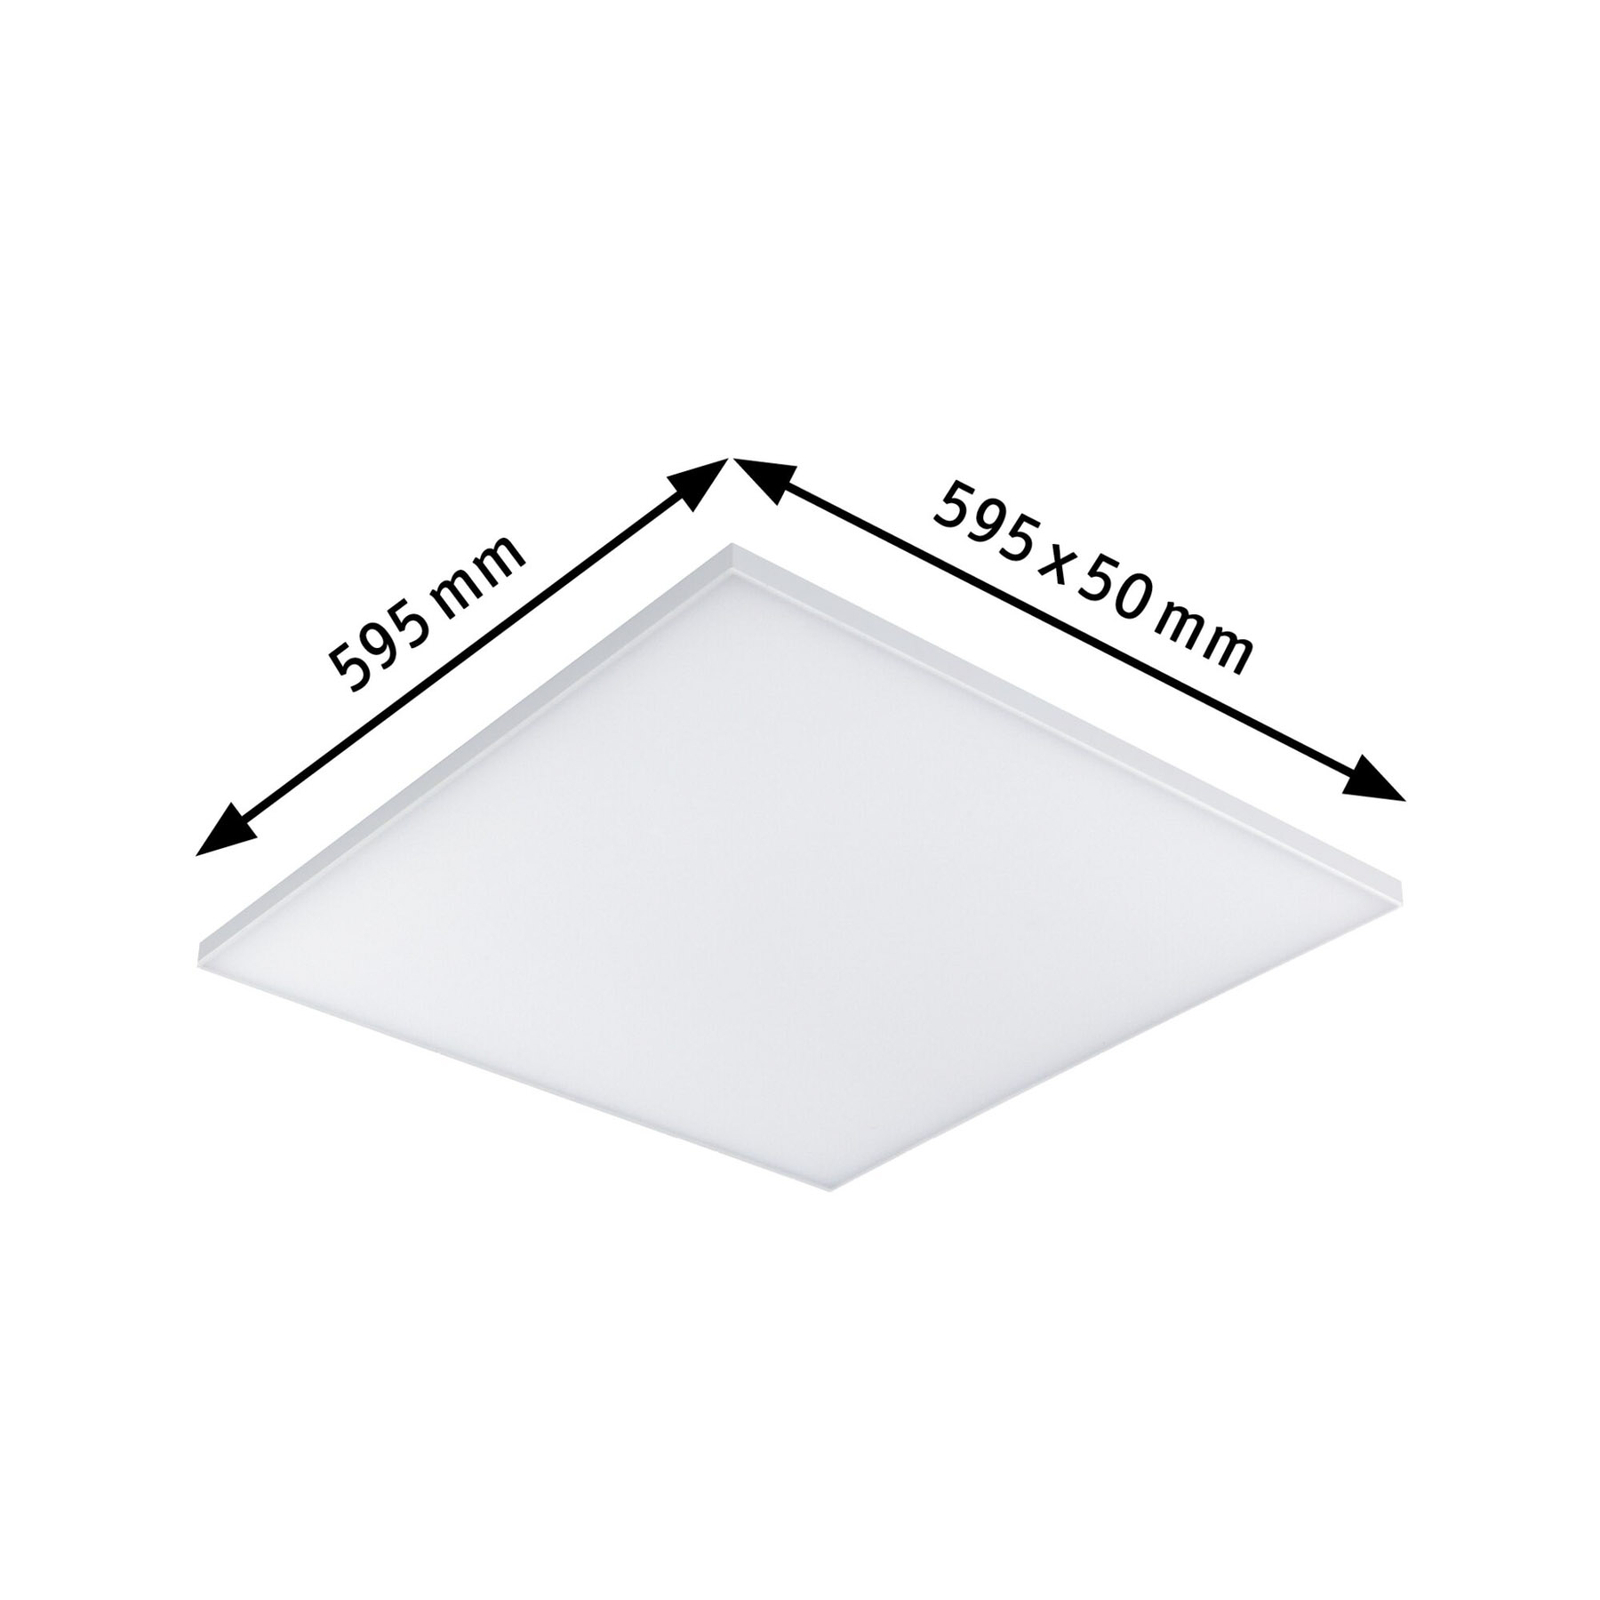 Paulmann Velora LED panel 3-level dim 59.5x59.5 cm